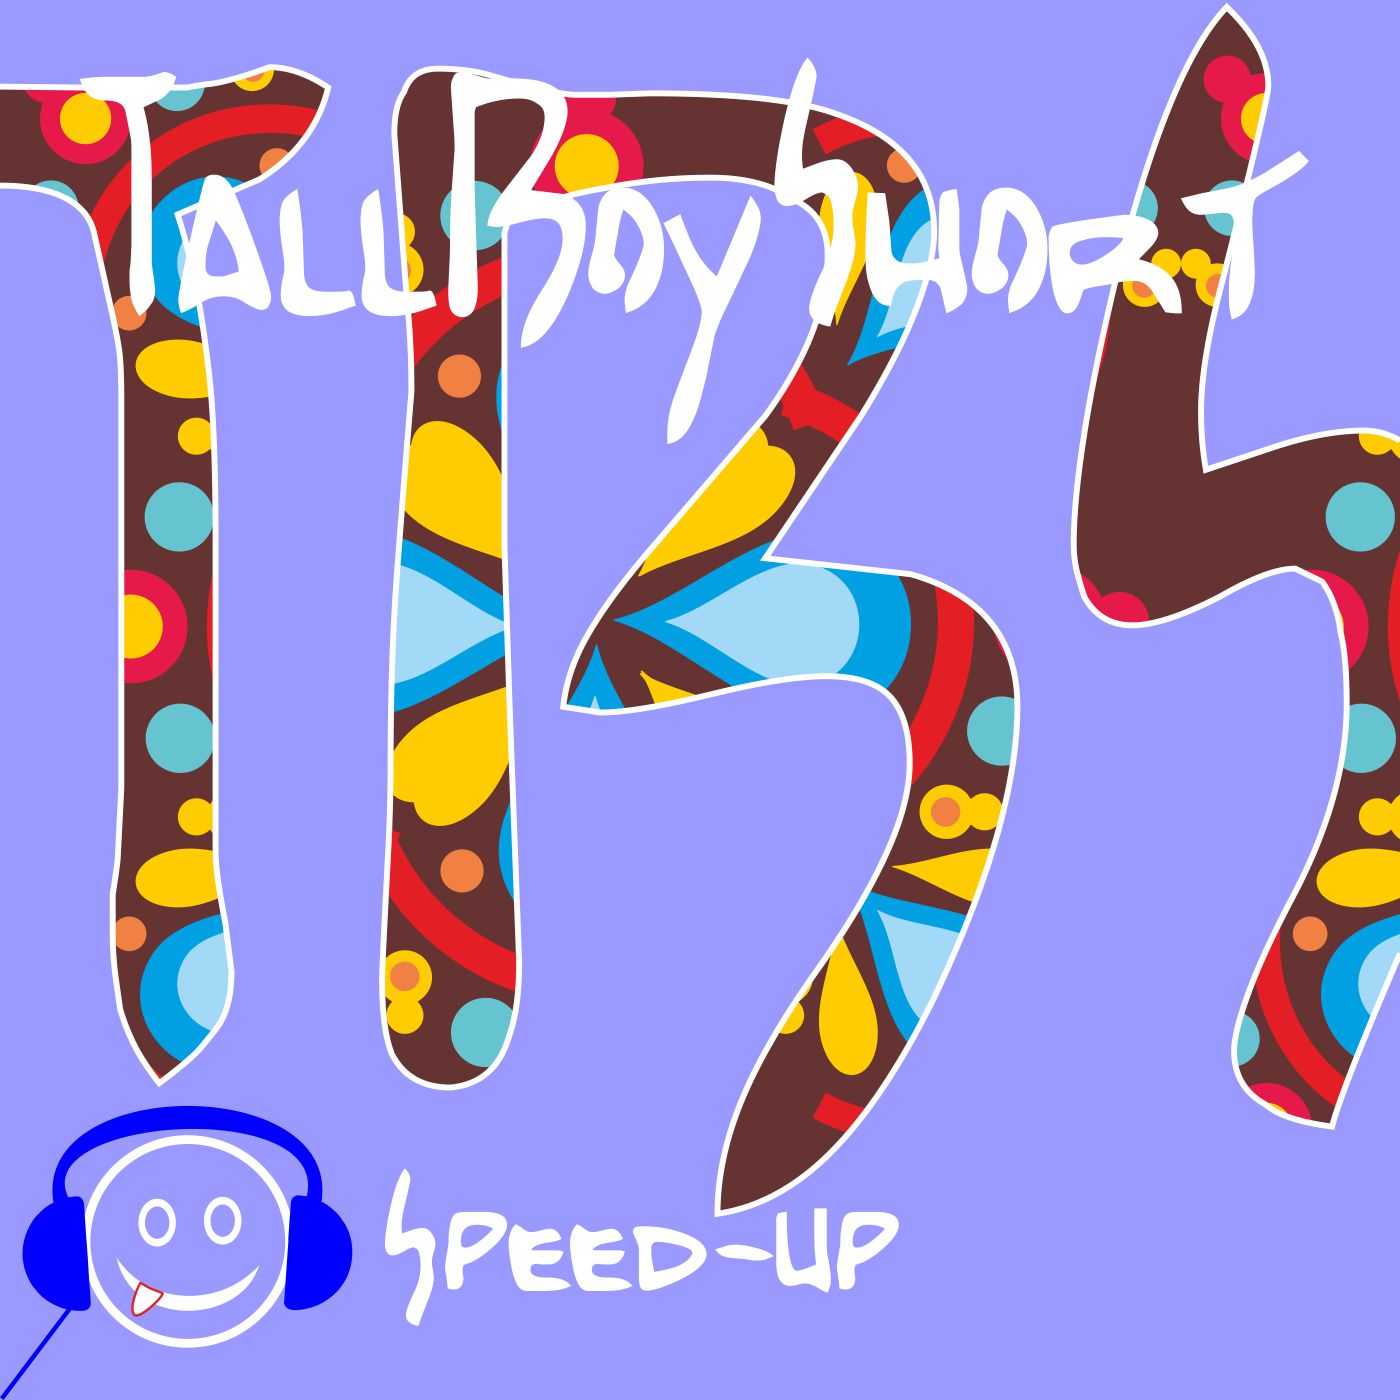 TBS - Speed-up